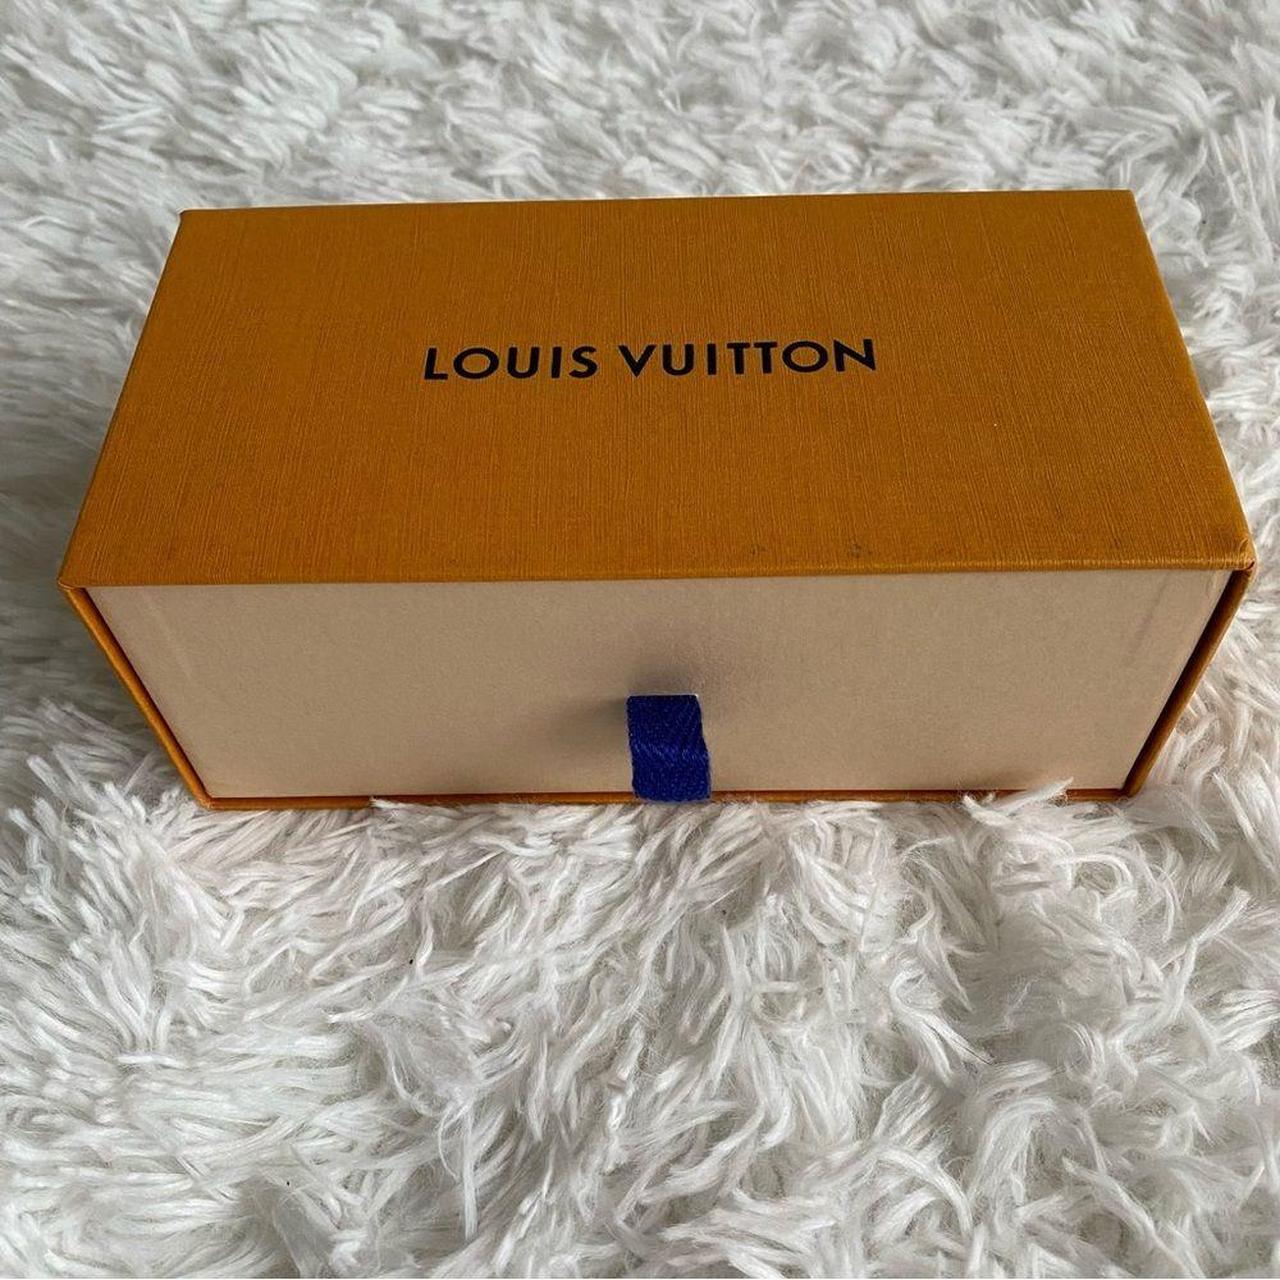 Louis Vuitton Orange Gift Box